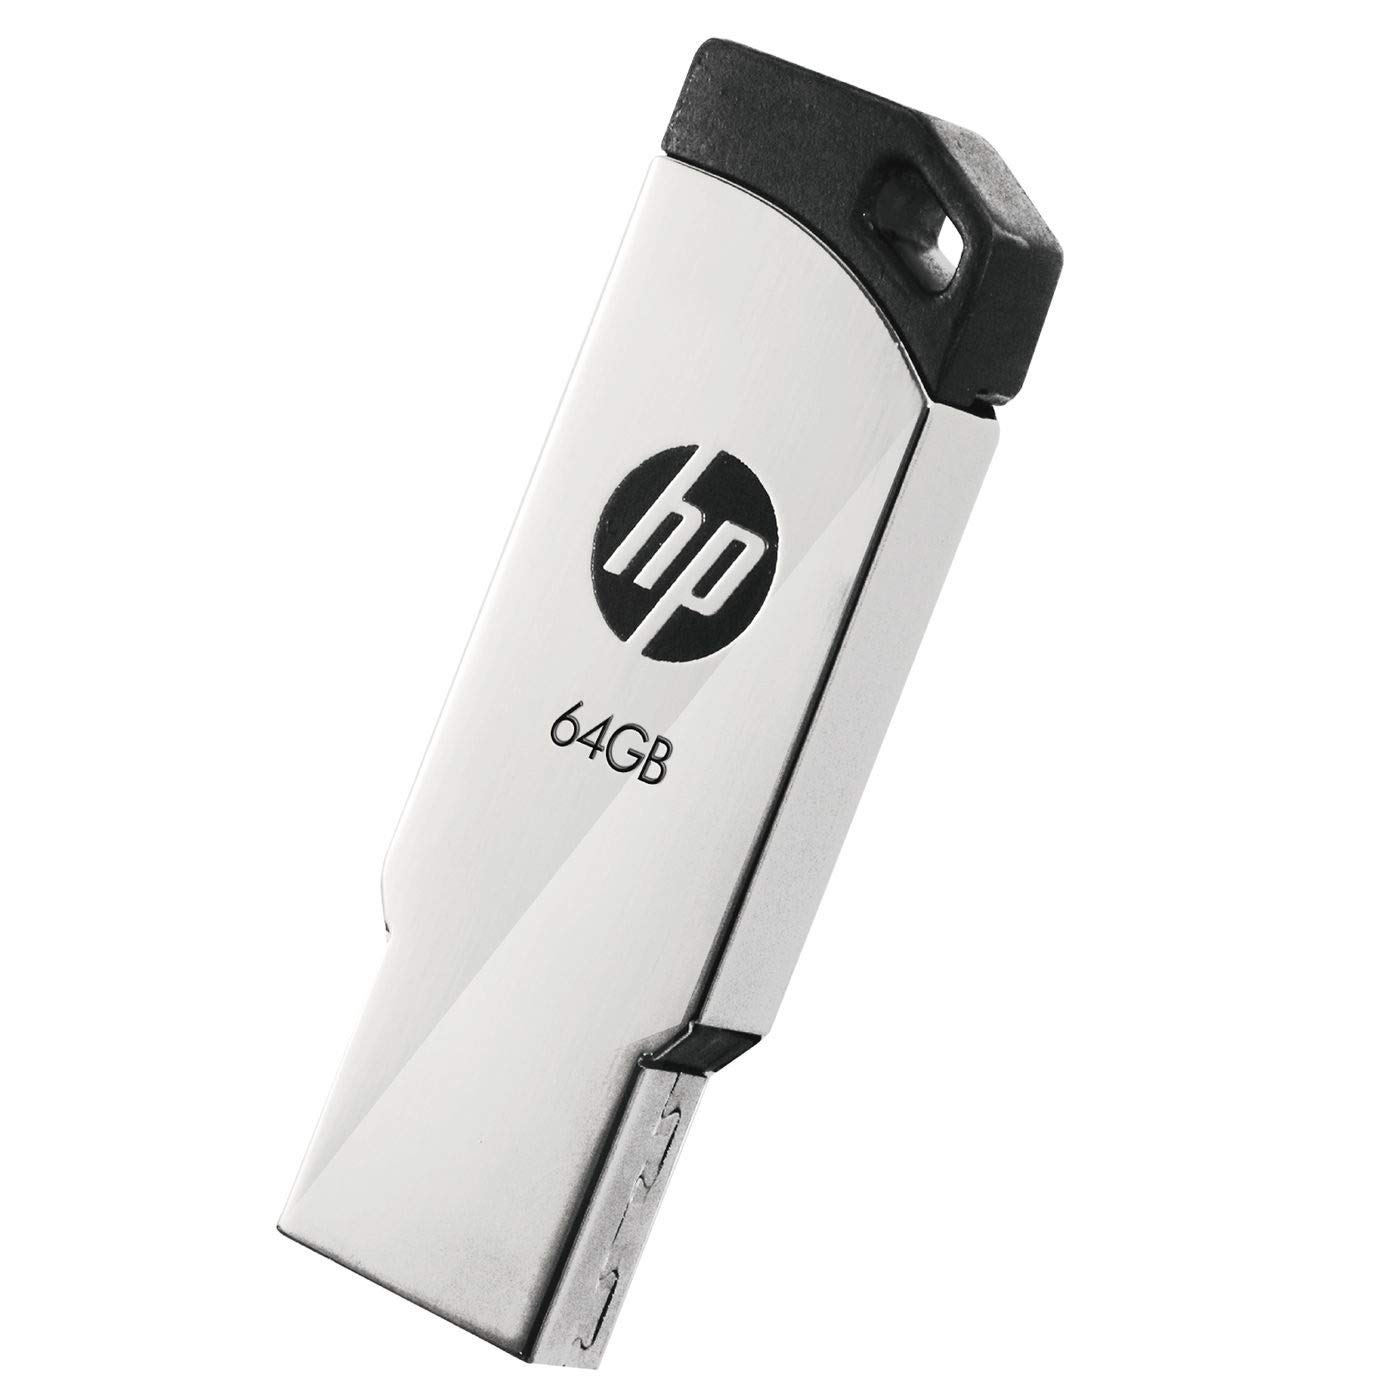 HP 64GB USB 2.0 Pen Drive v236w Still